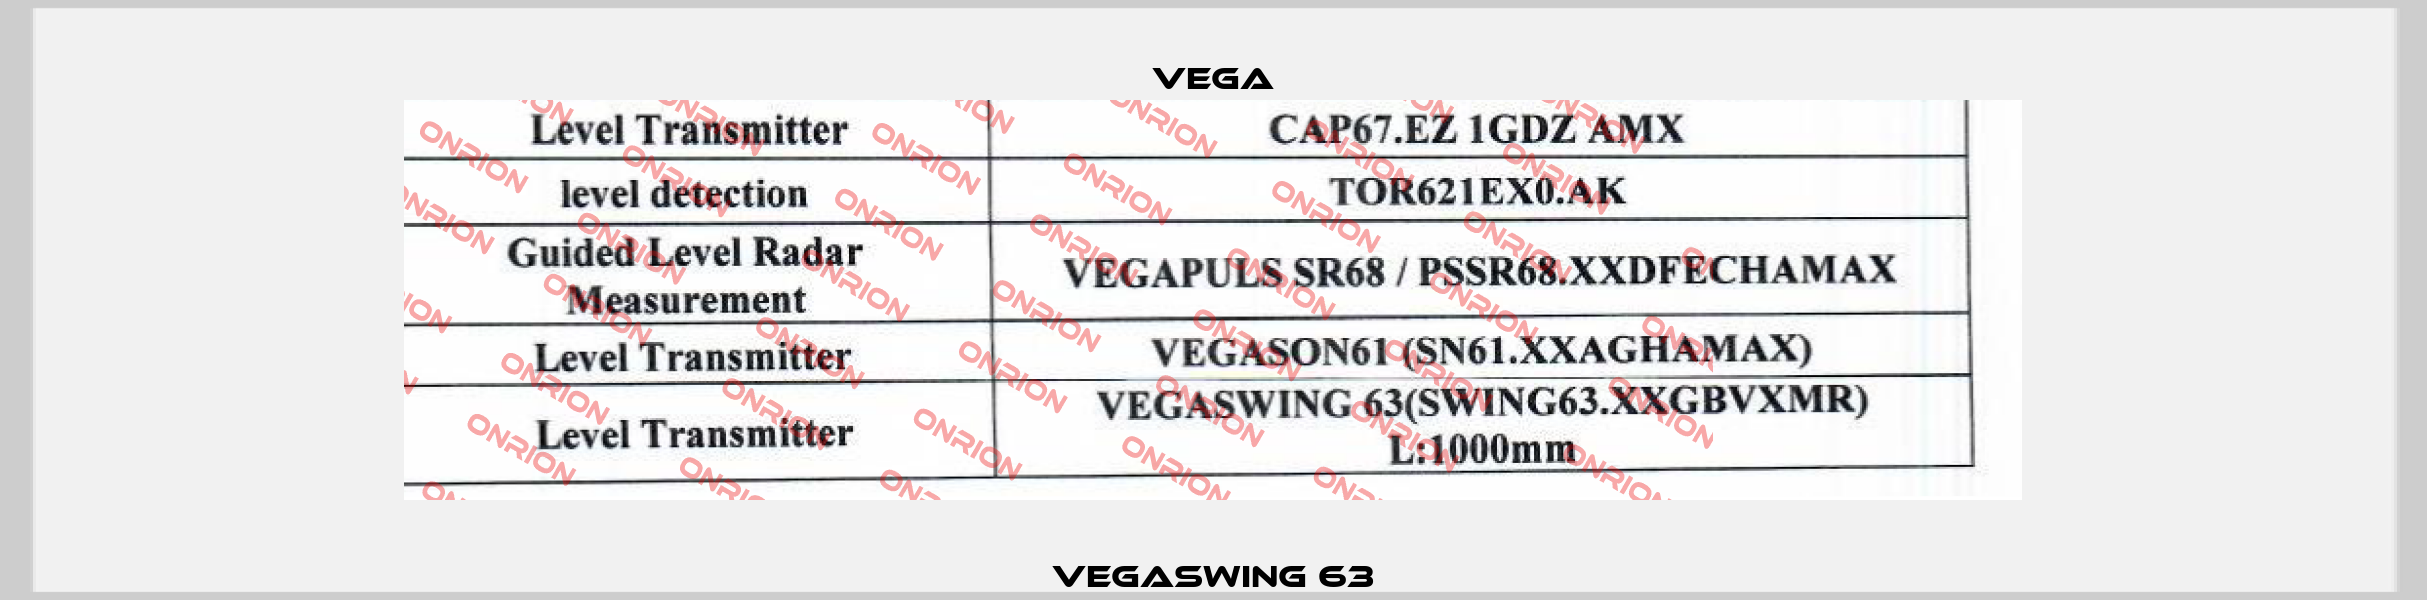 VEGASWING 63 Vega